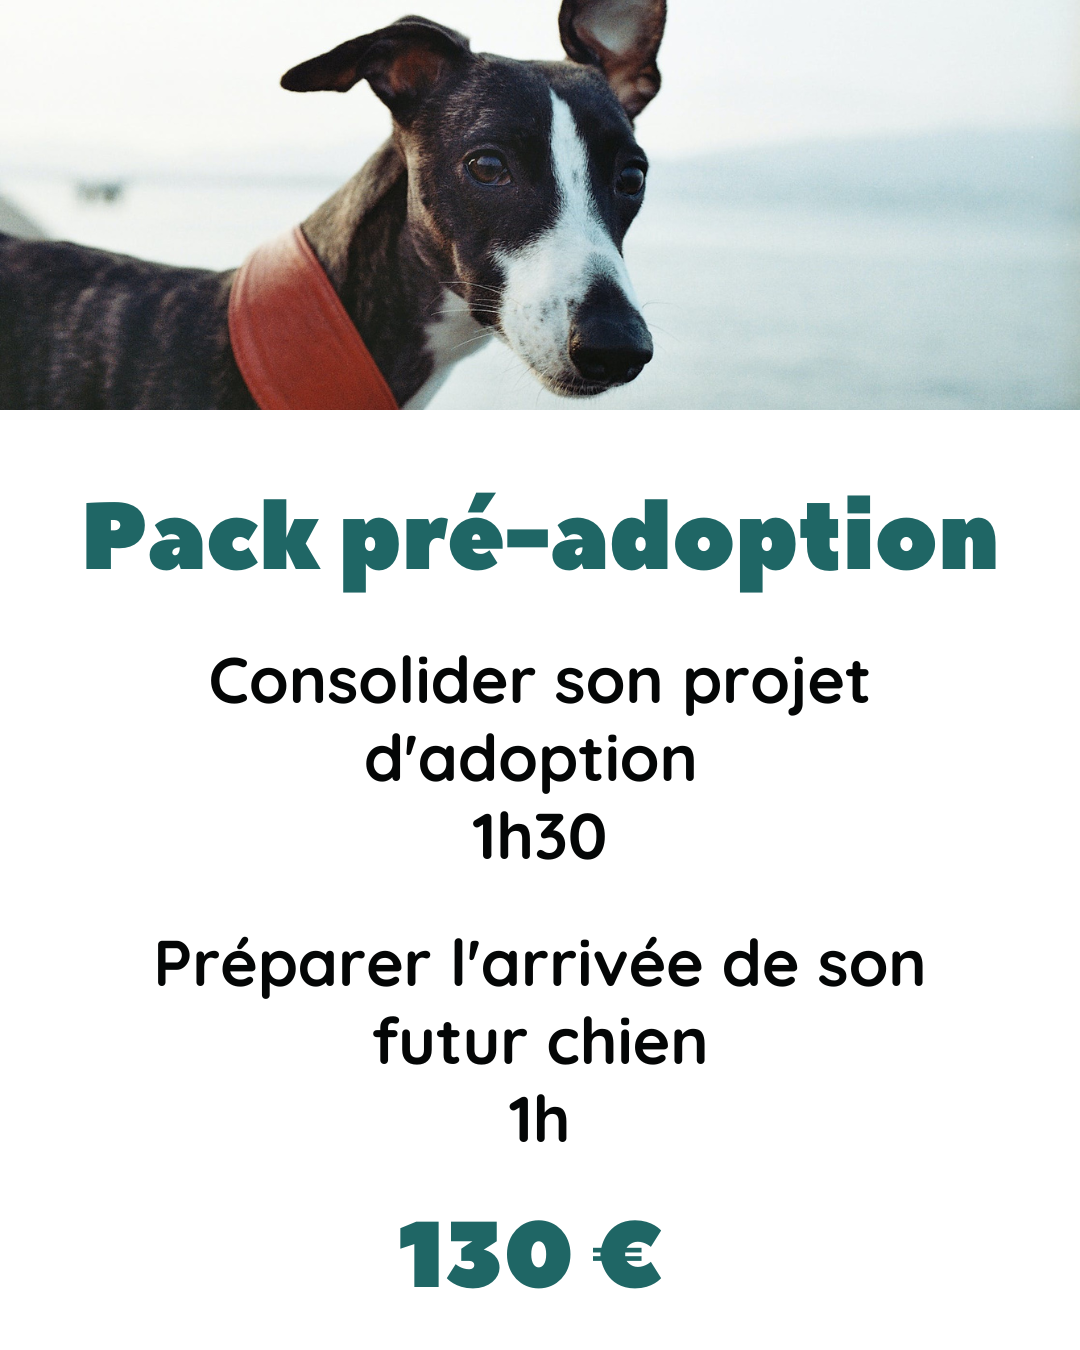 Pack pré-adoption